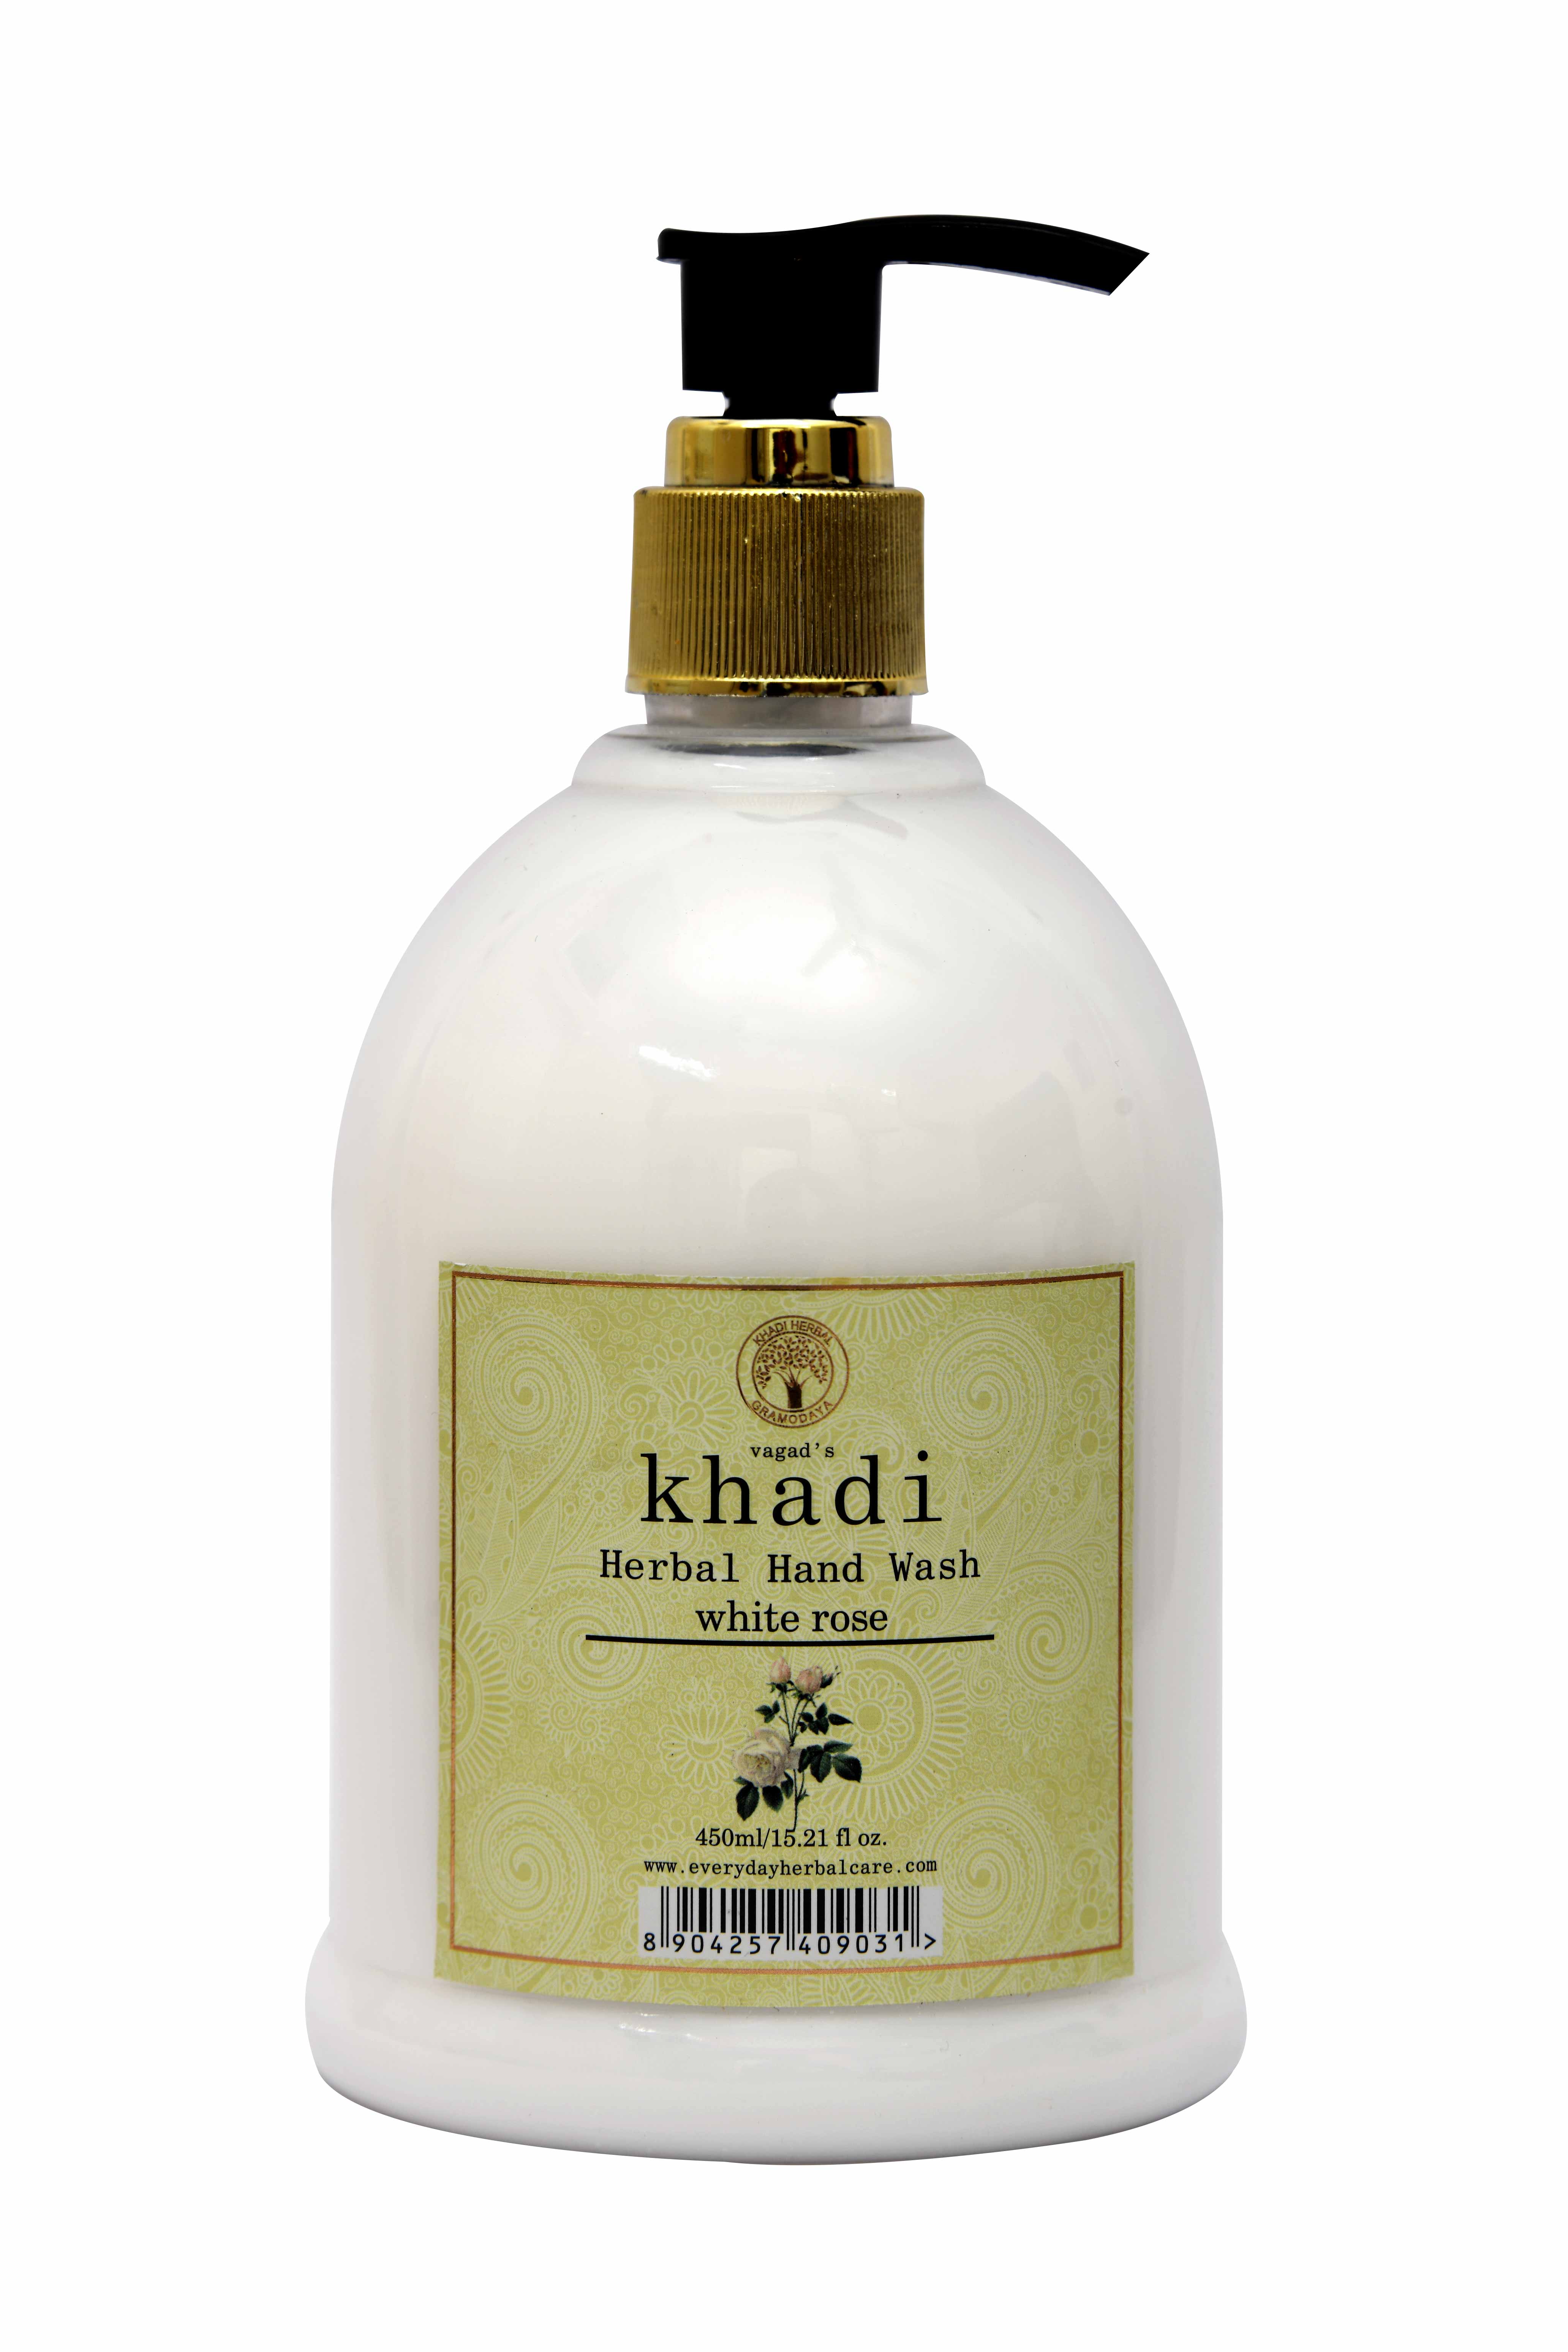 Buy Vagad's Khadi White Rose Herbal Handwash at Best Price Online